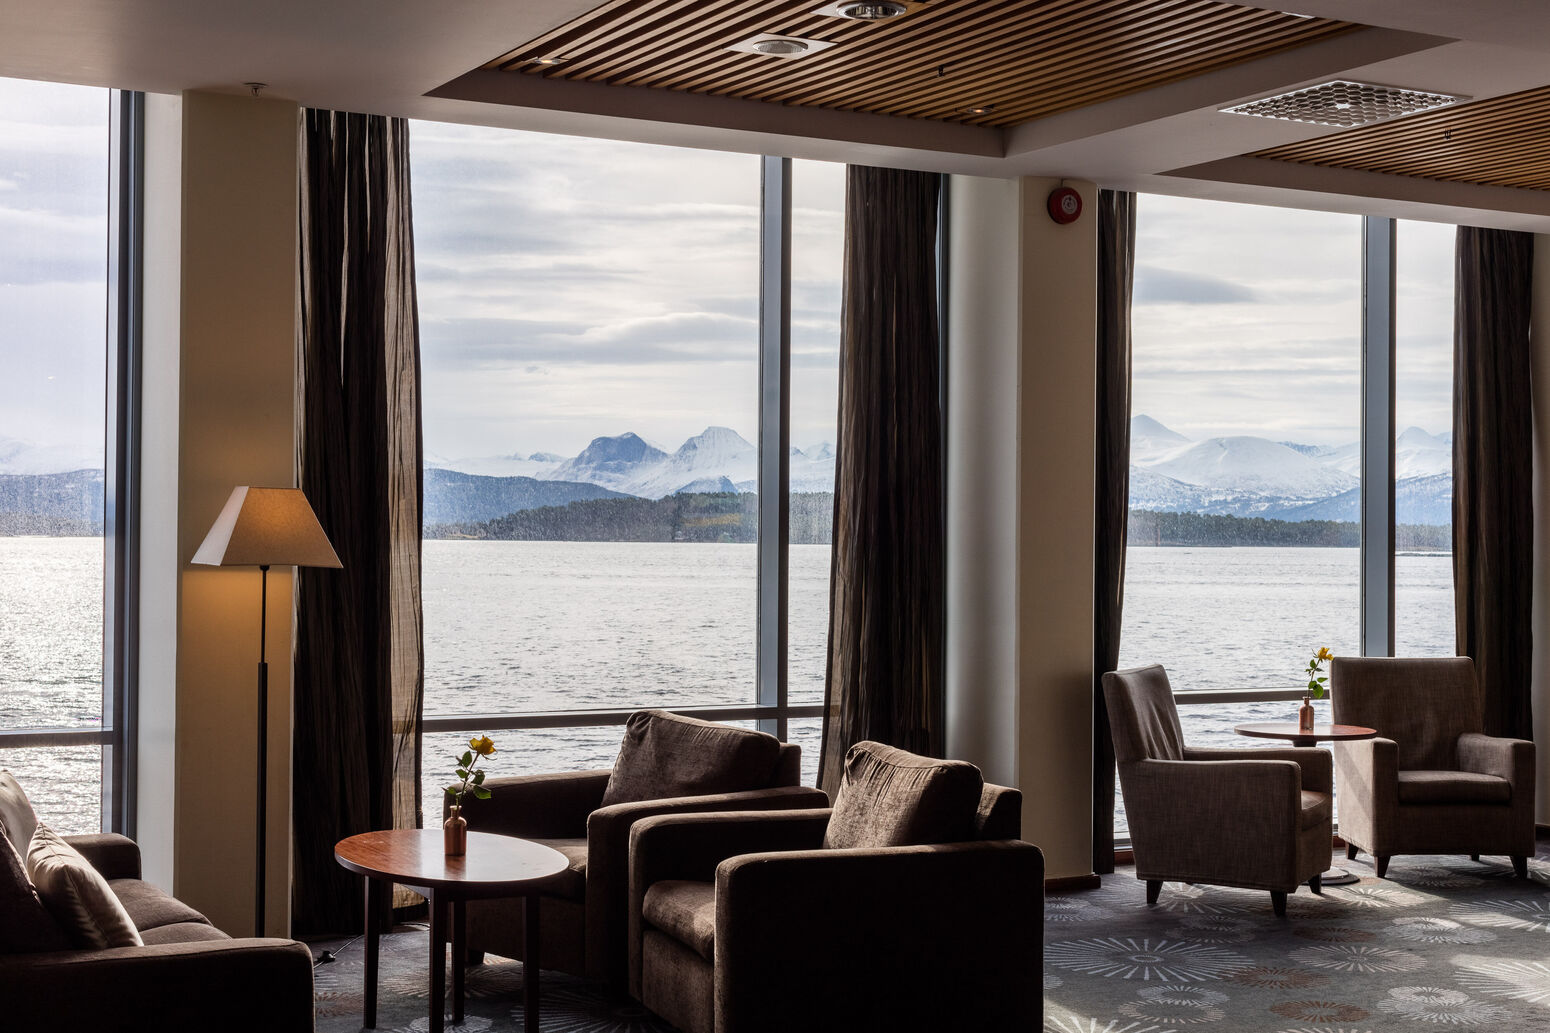 Hotel, Hotell, Molde, Norge, Restaurant, Scandic, Scandic Seilet, Scandic Seilet Molde, accomodation, norway, overnatting, room with a view, skybar, utsikt